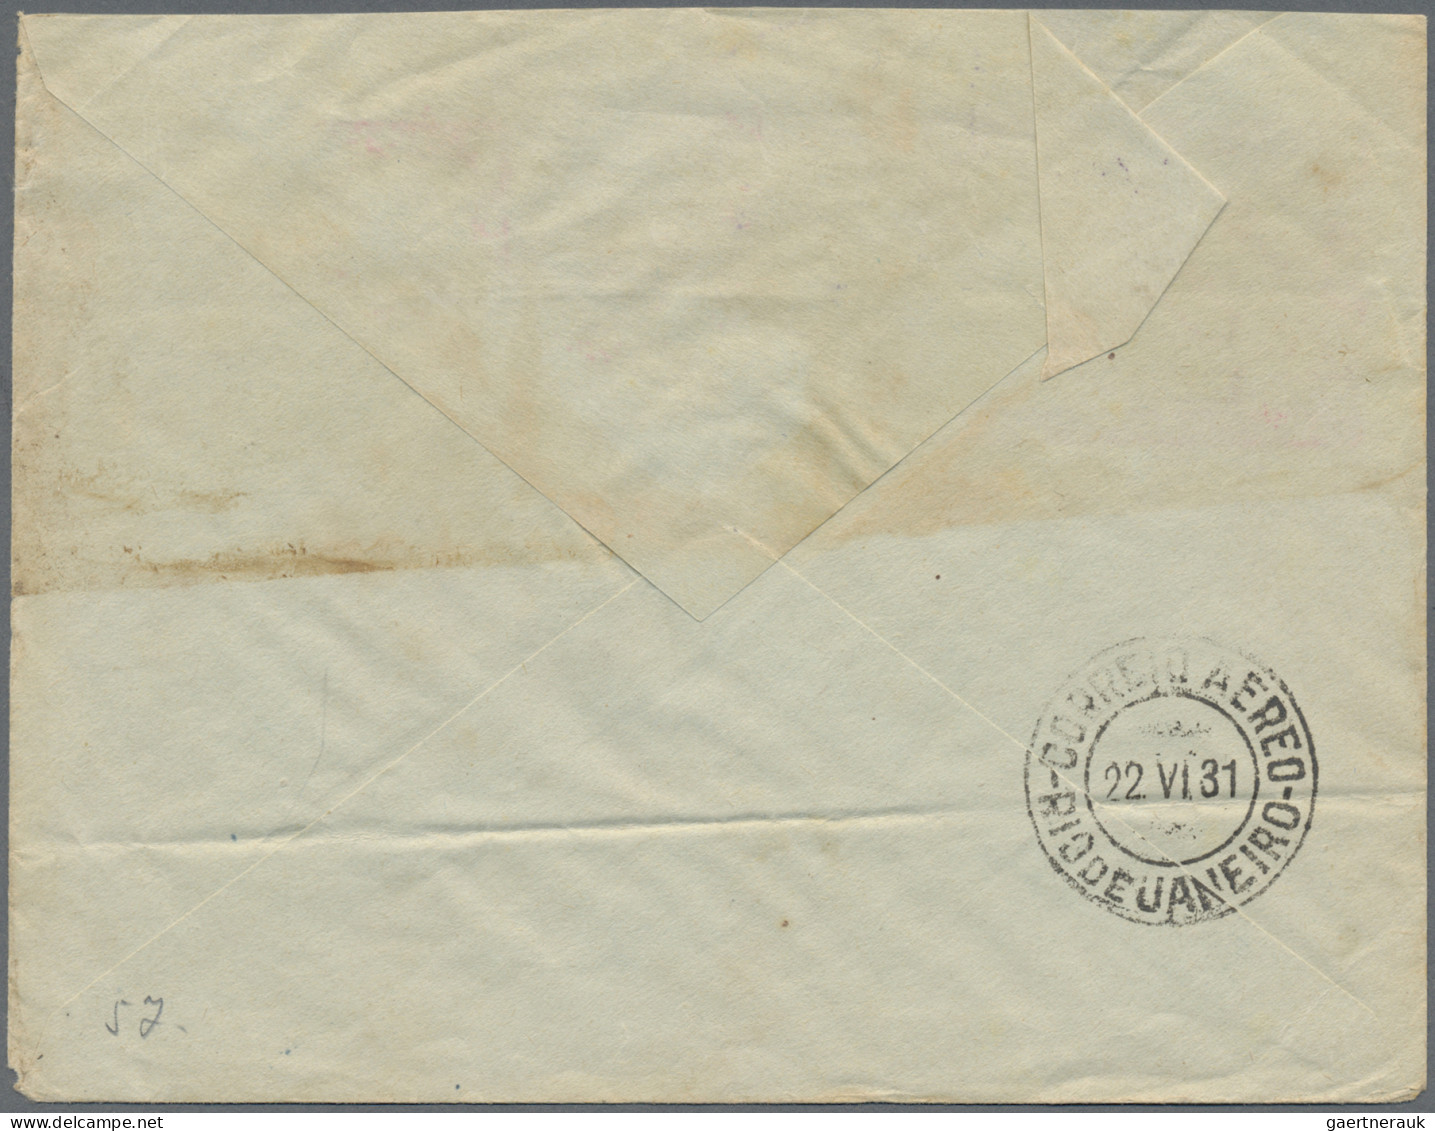 Zeppelin Mail - Germany: 1912/1940 (ca.), Zeppelinpost + Luftpost, hochwertiger